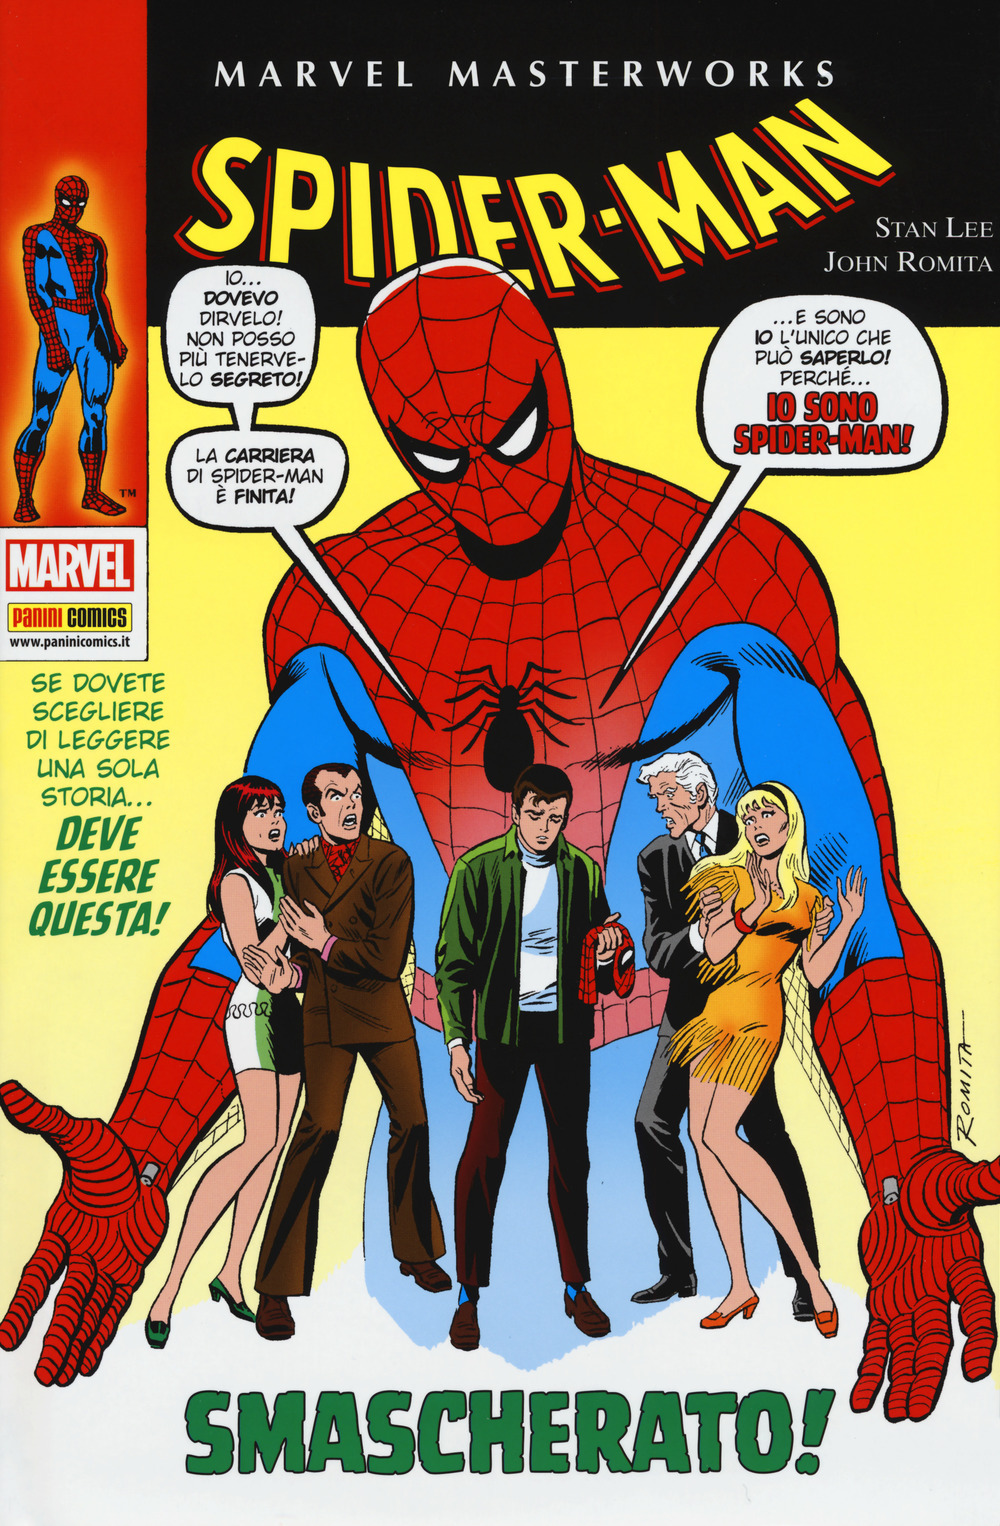 Image of Spider-Man. Vol. 9: Smascherato!.